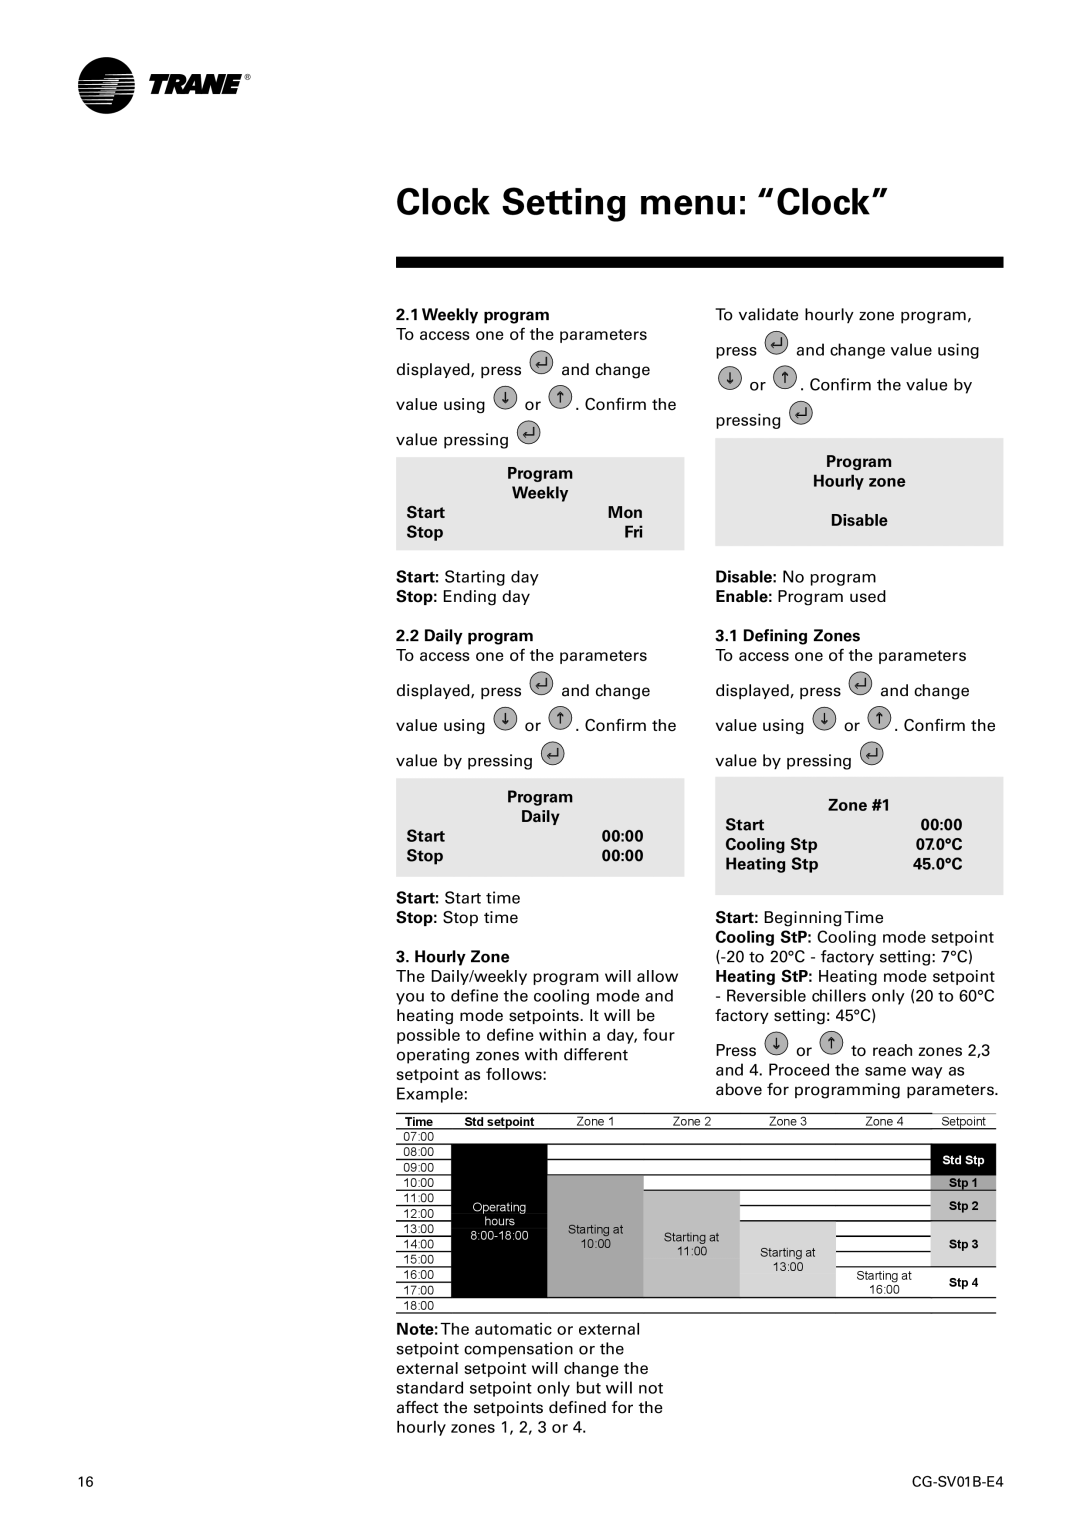 American Standard TRACER CH532 manual Clock Setting menu “Clock”, Program, hours, 800-1800 